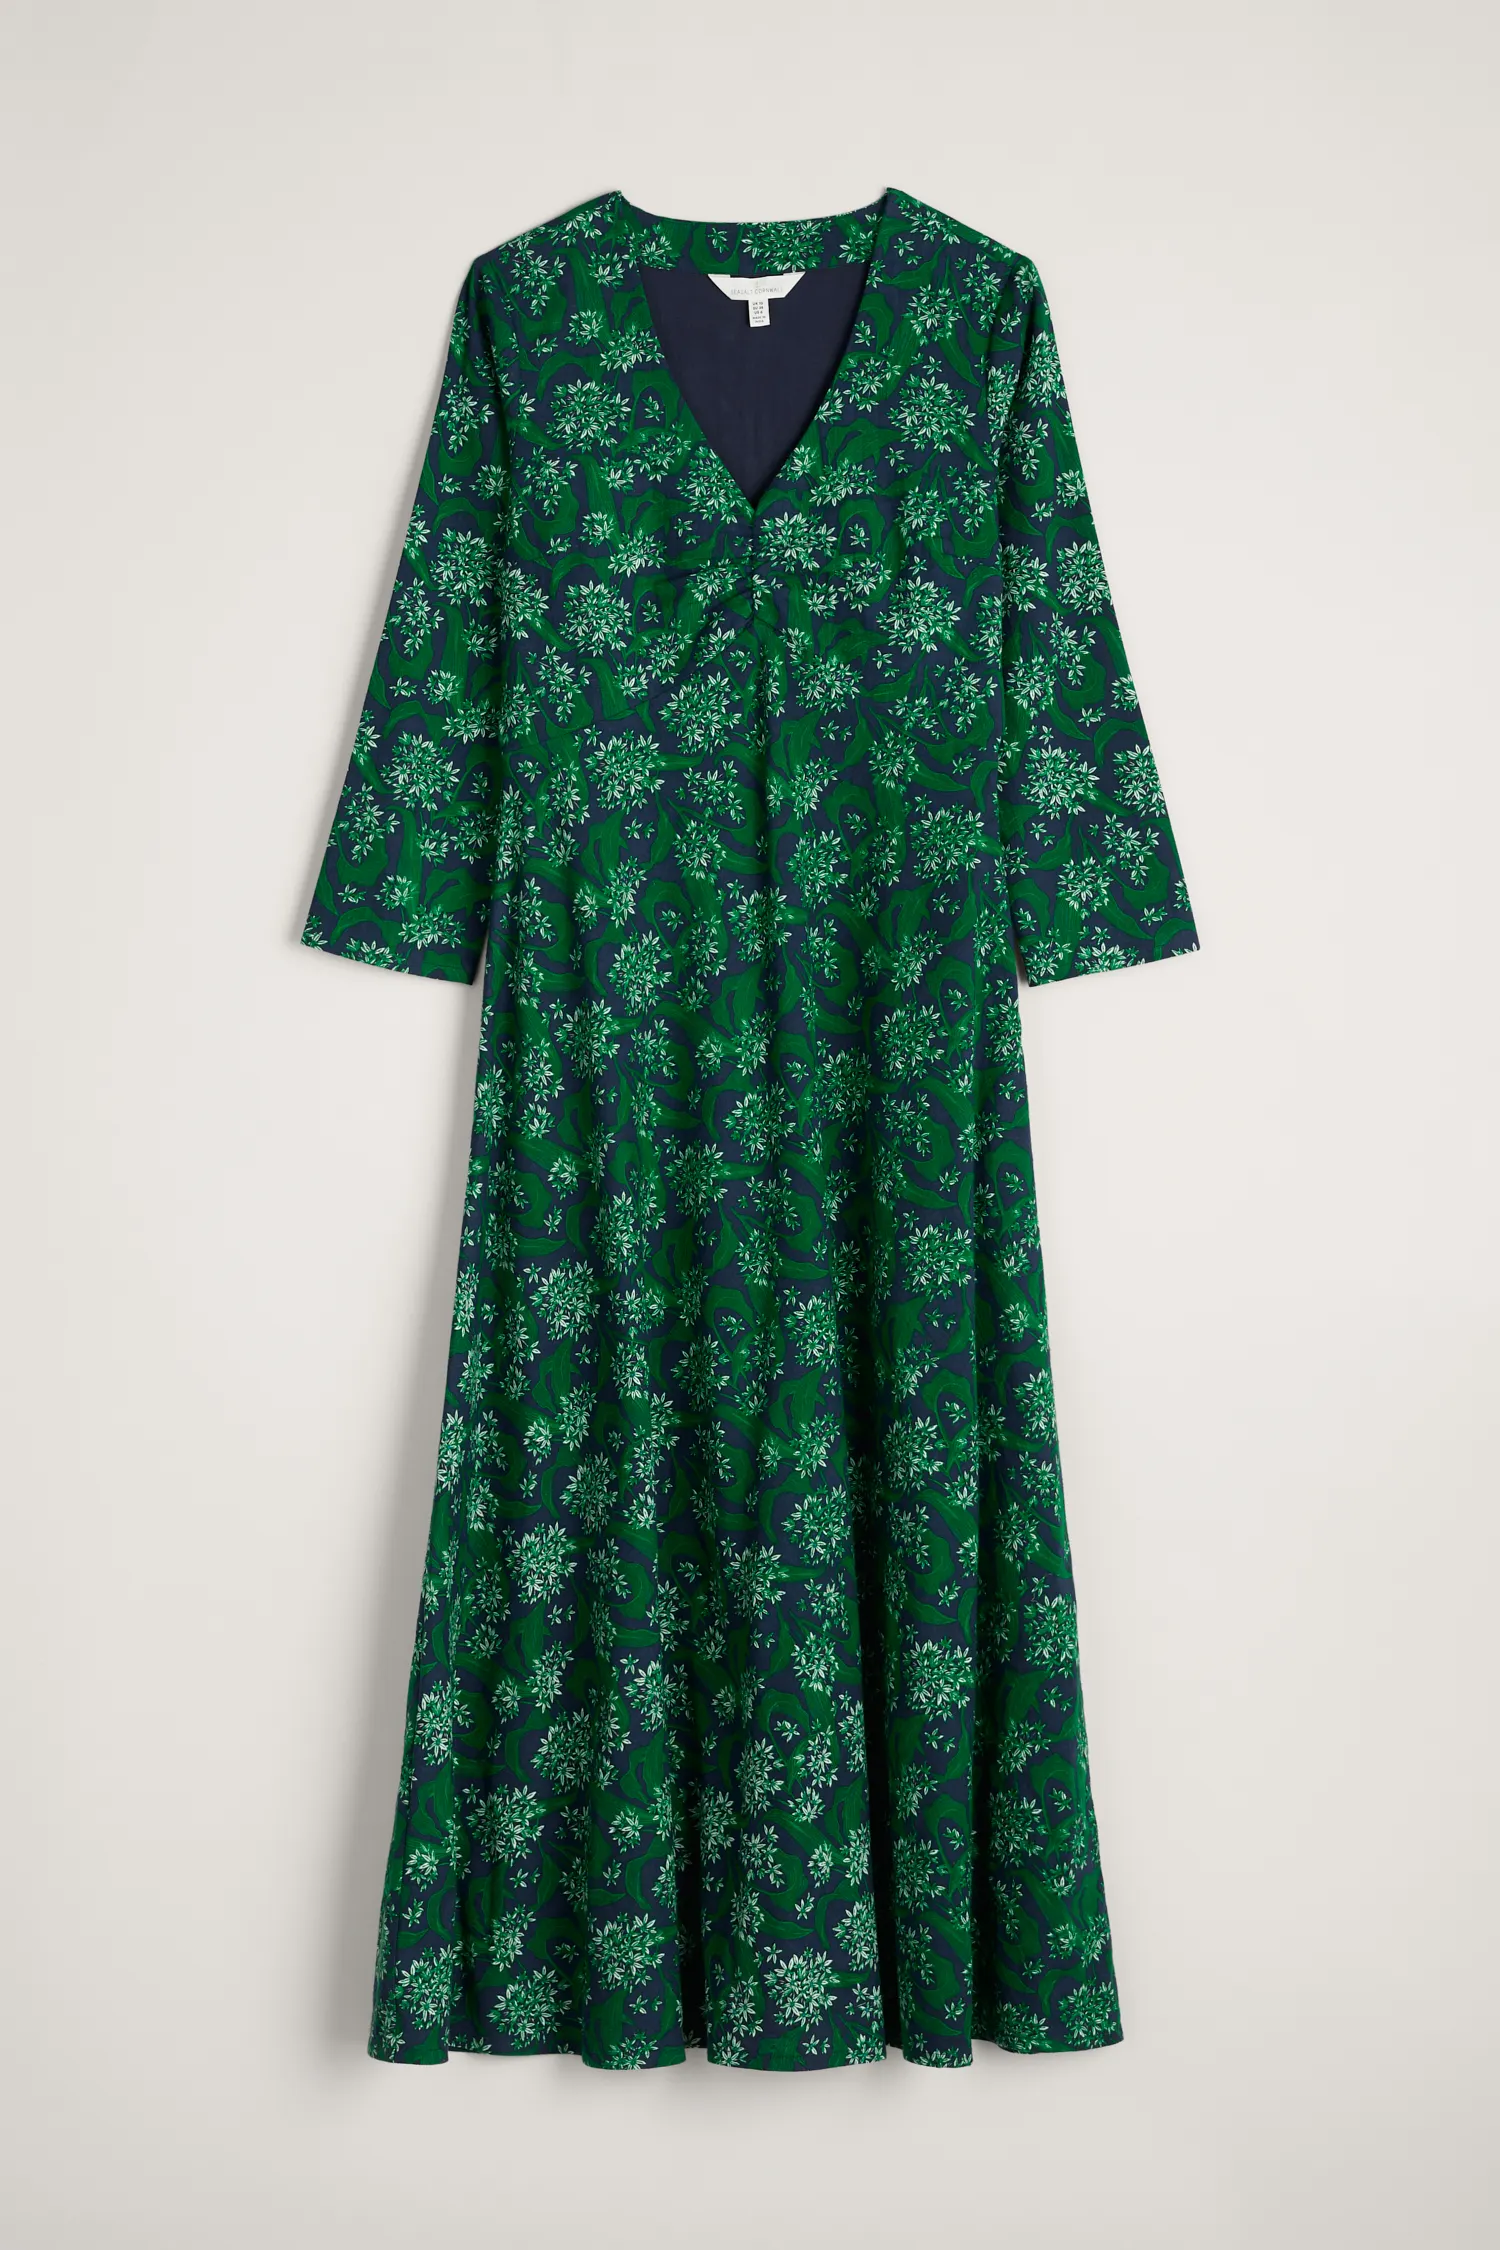 SEASALT CORNWALL Kleid Willow Blossom Dress, Muster: Woodland Garlic Maritime, Bärlauch Kleid